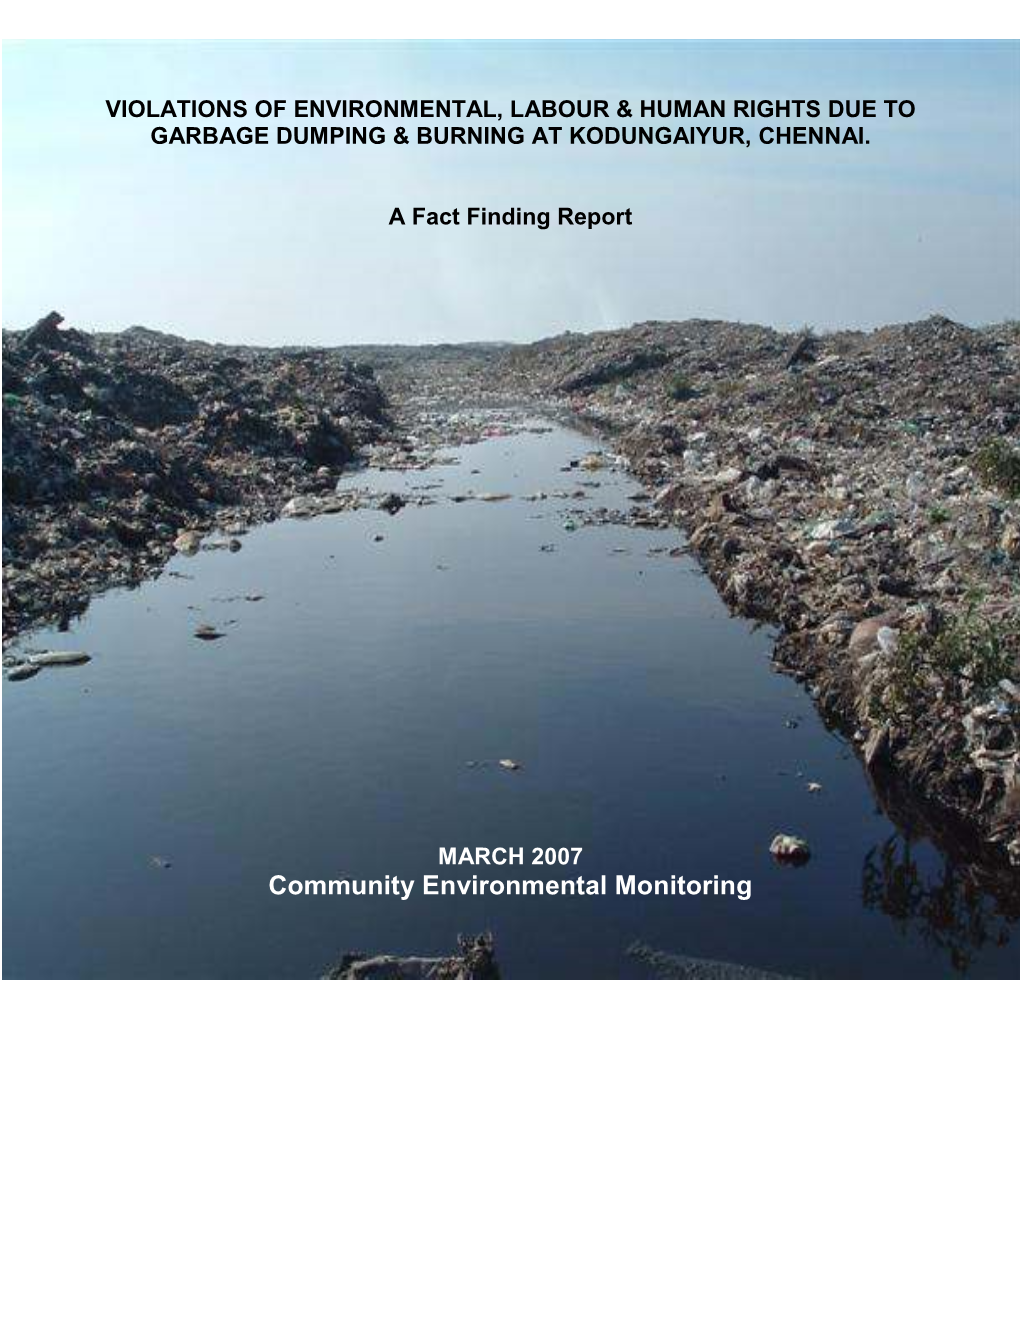 Community Environmental Monitoring Acknowledgements